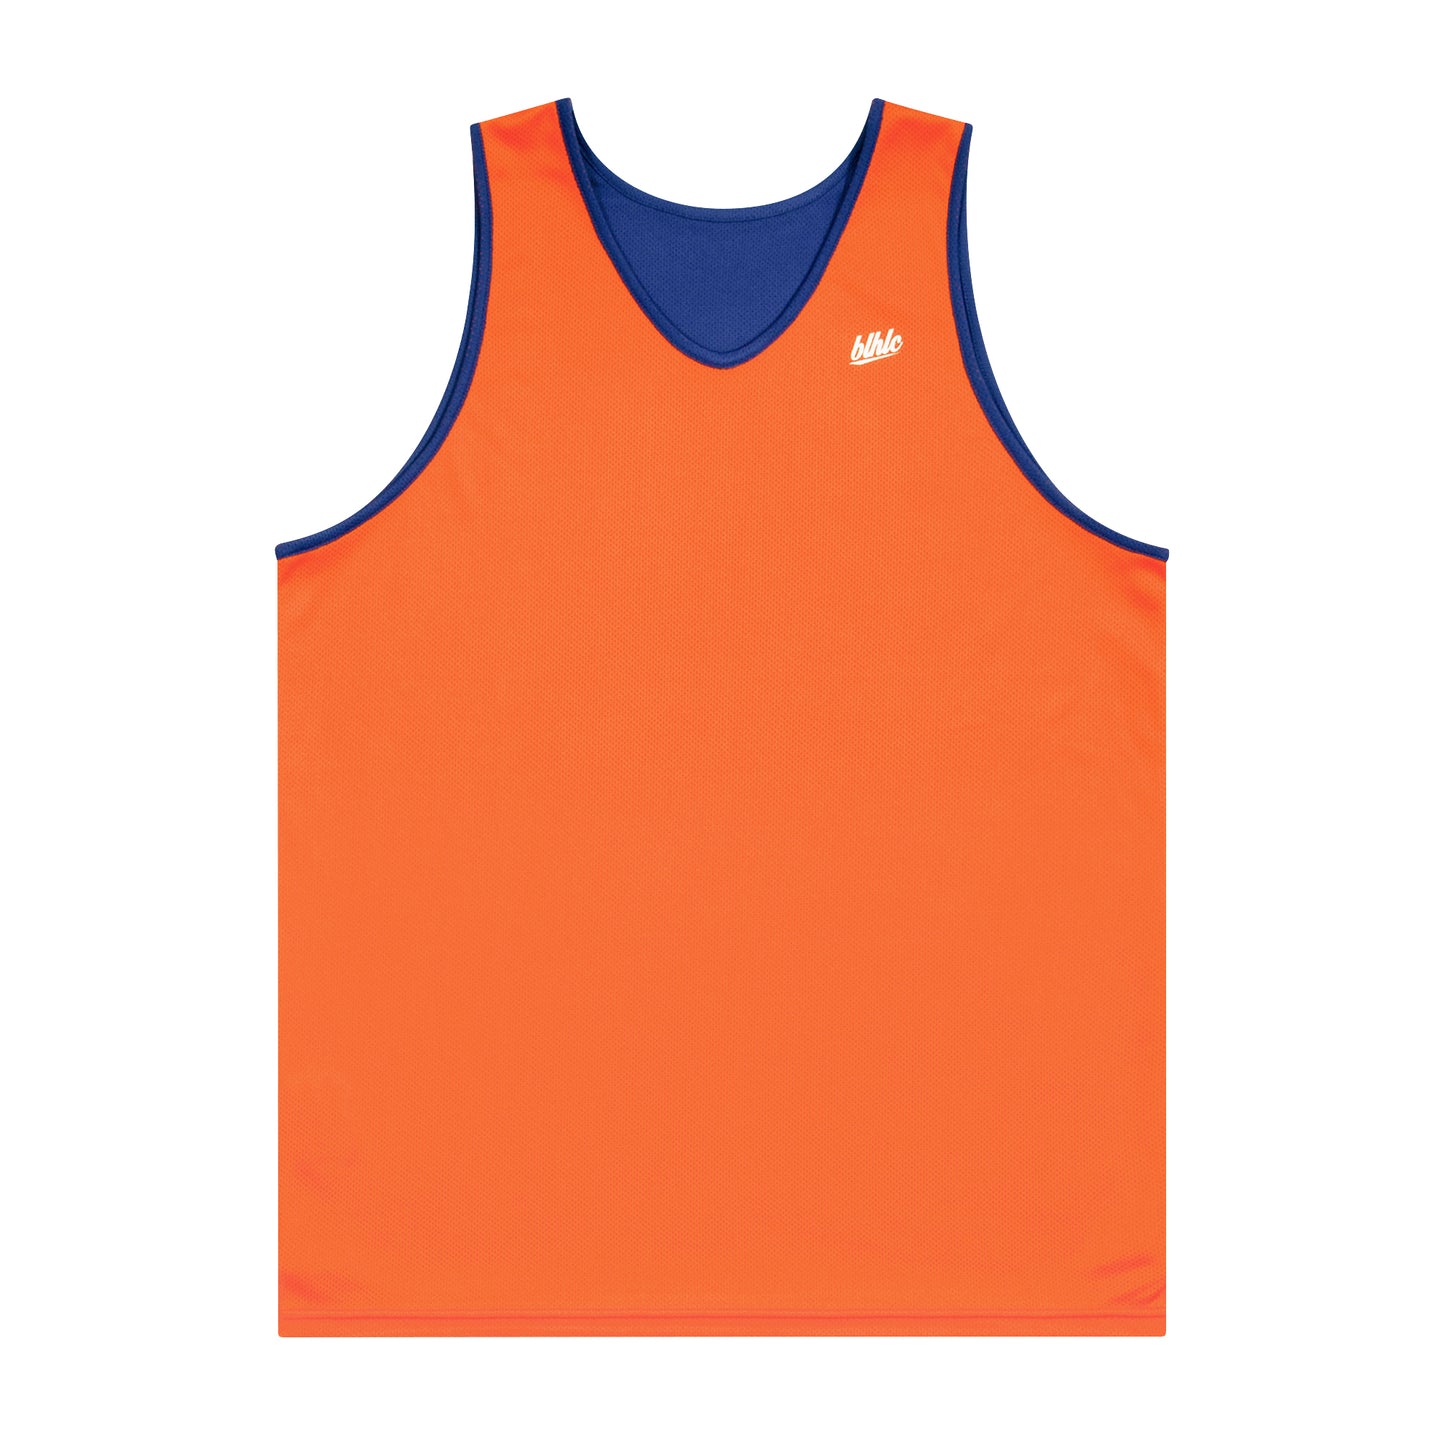 Basic Reversible Jersey (blue/orange)